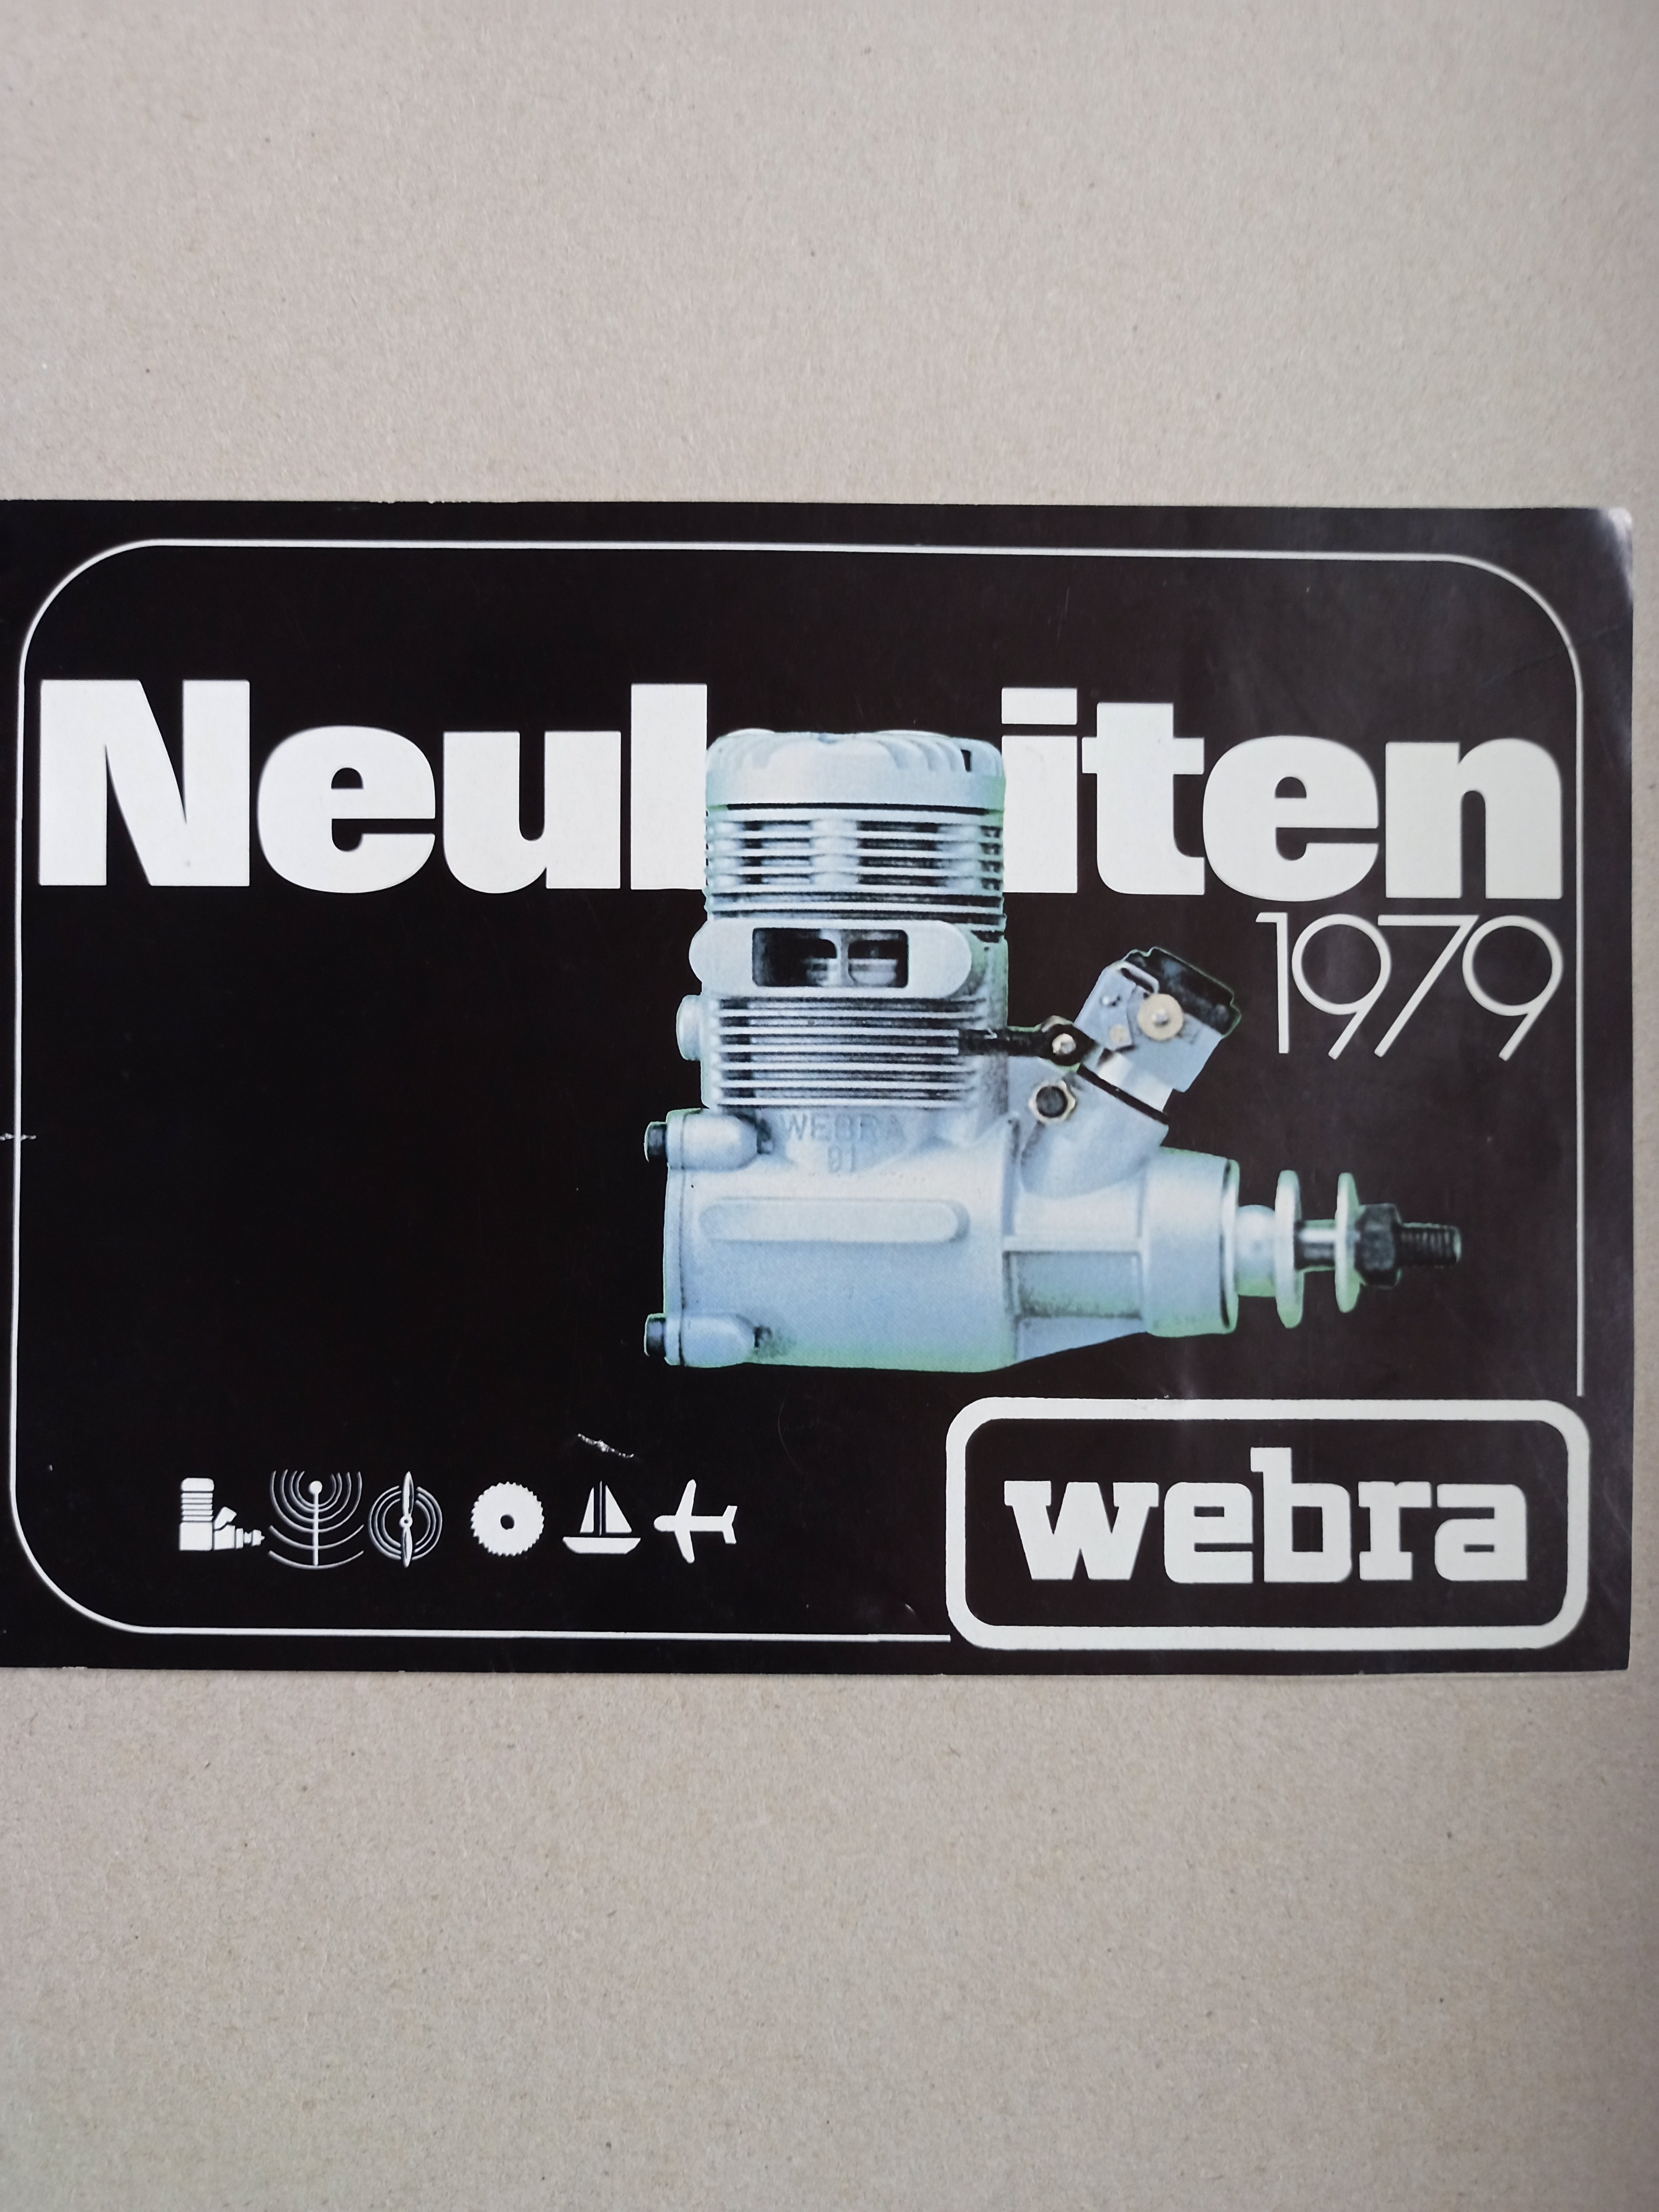 WEBRA Neuheiten 1979 (Deutsches Segelflugmuseum mit Modellflug CC BY-NC-SA)